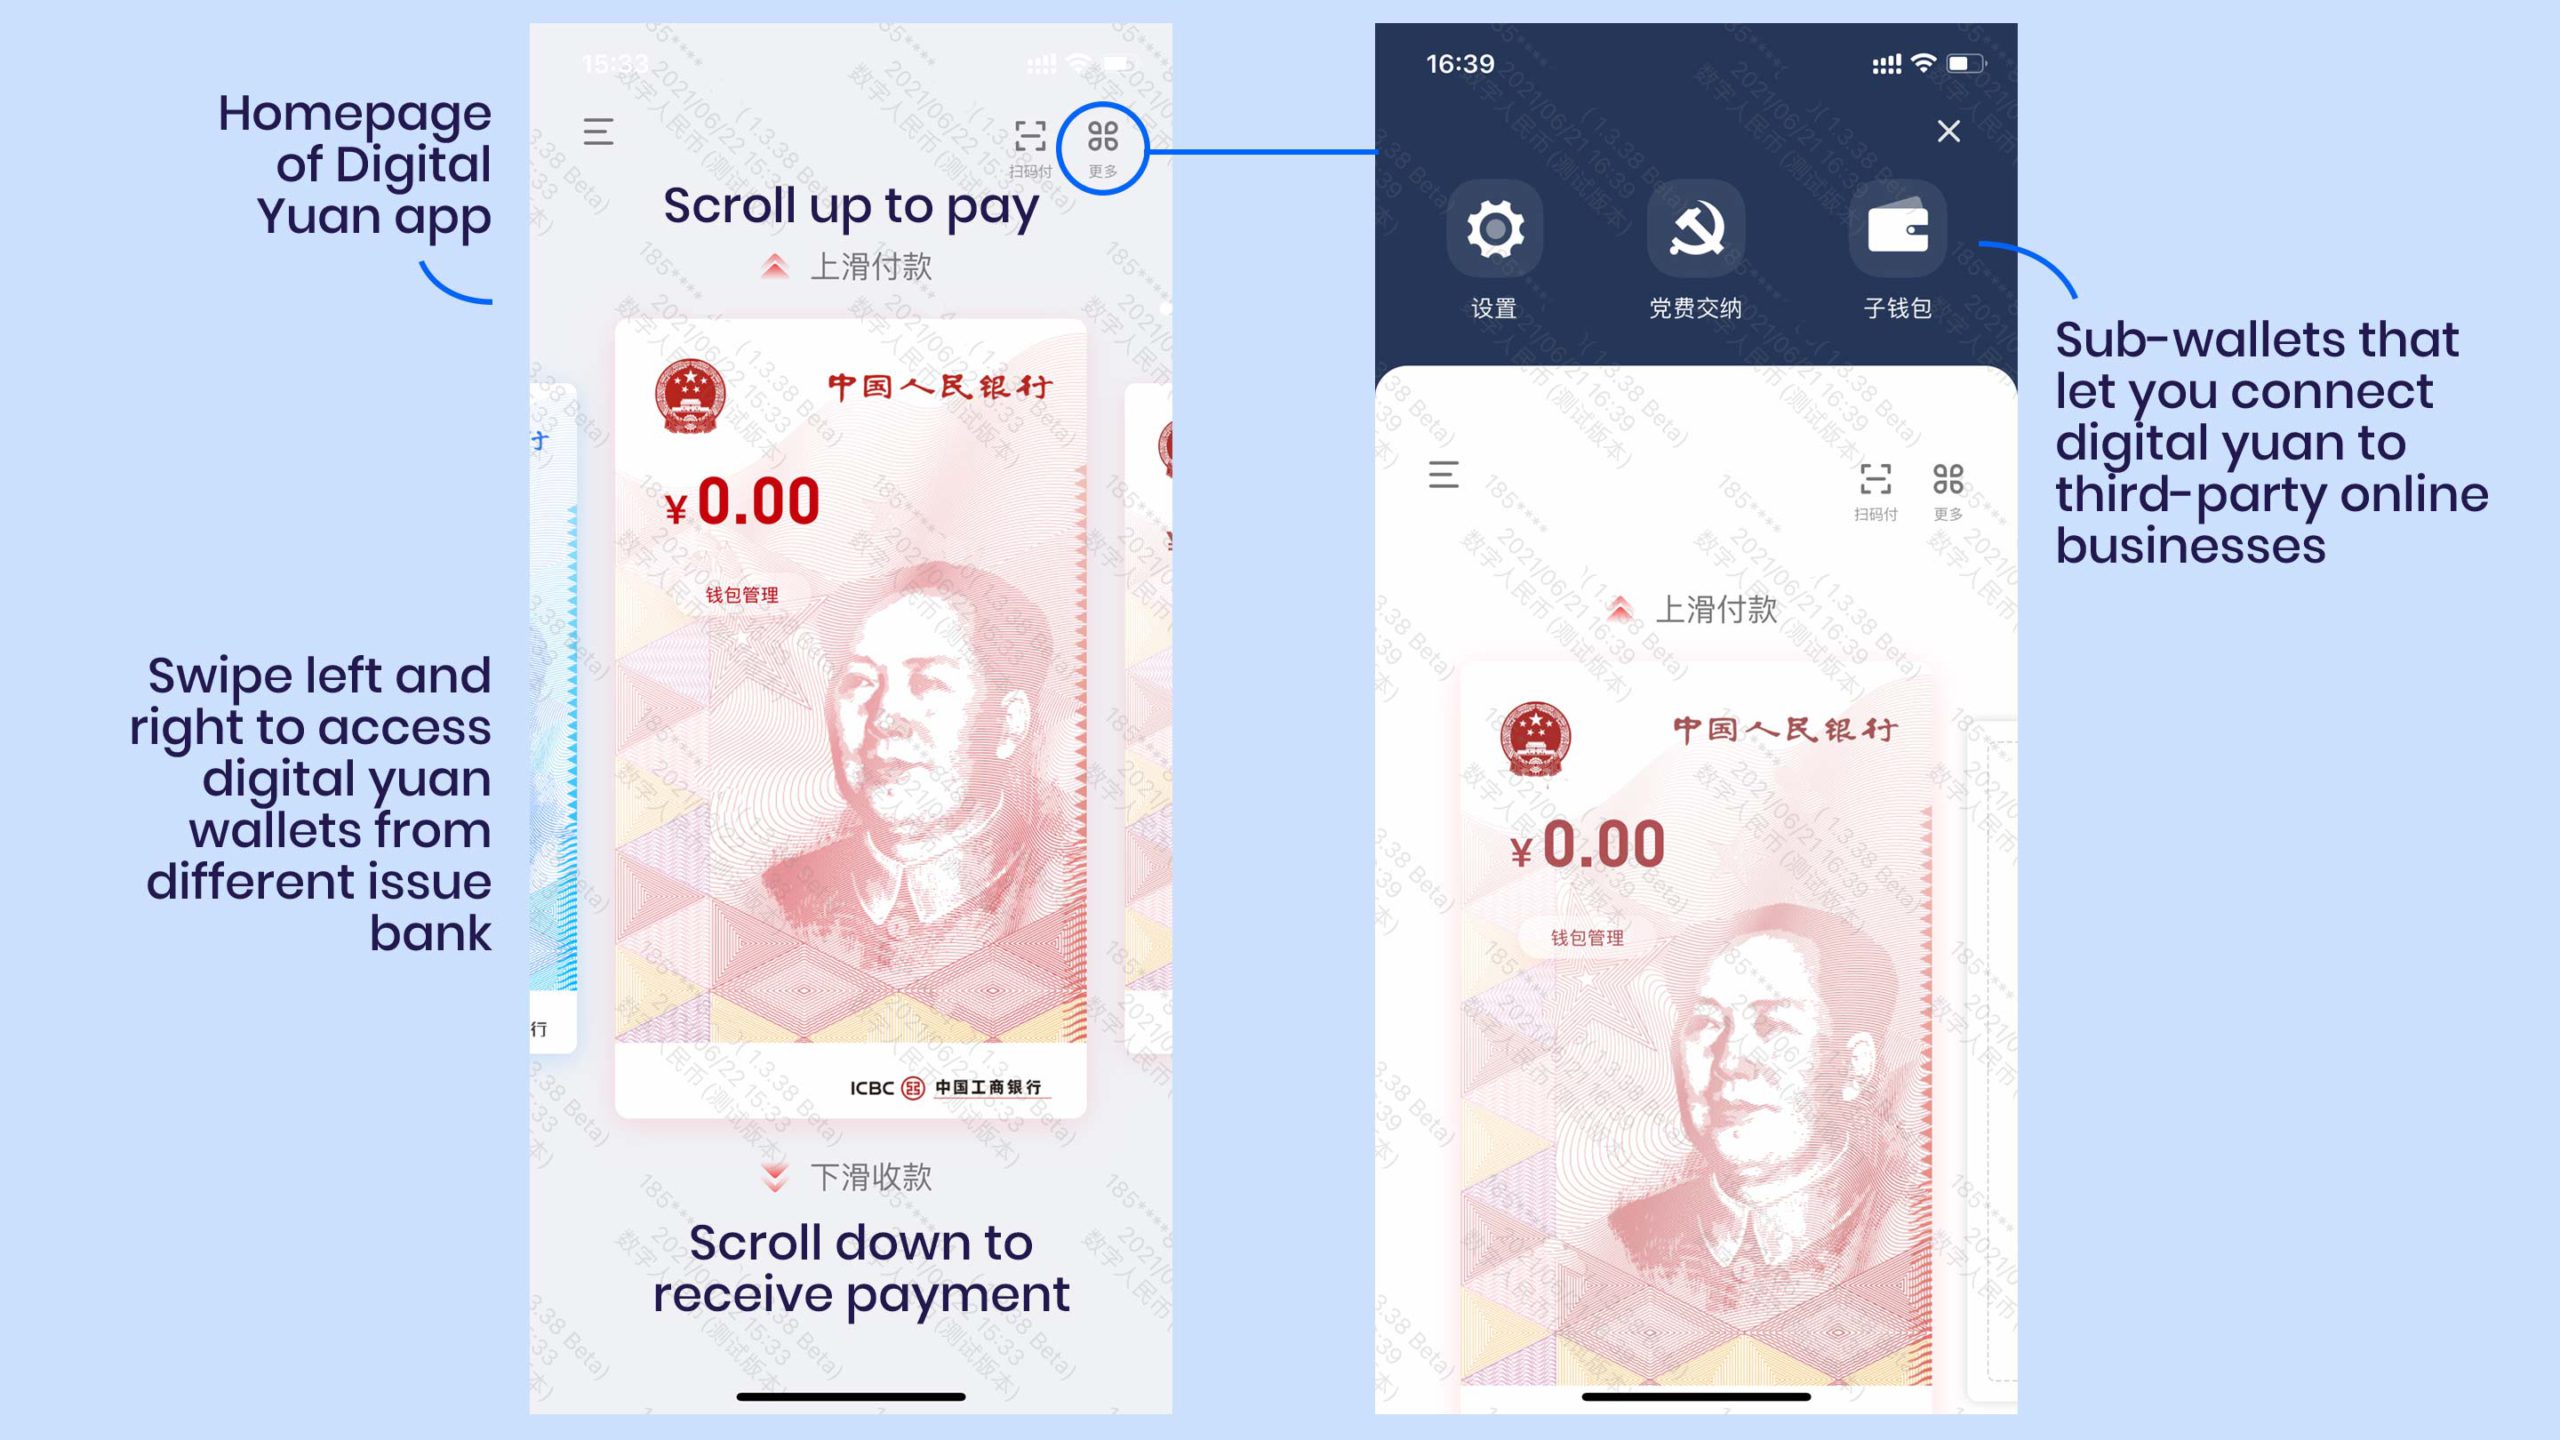 The Digital Yuan app's interface